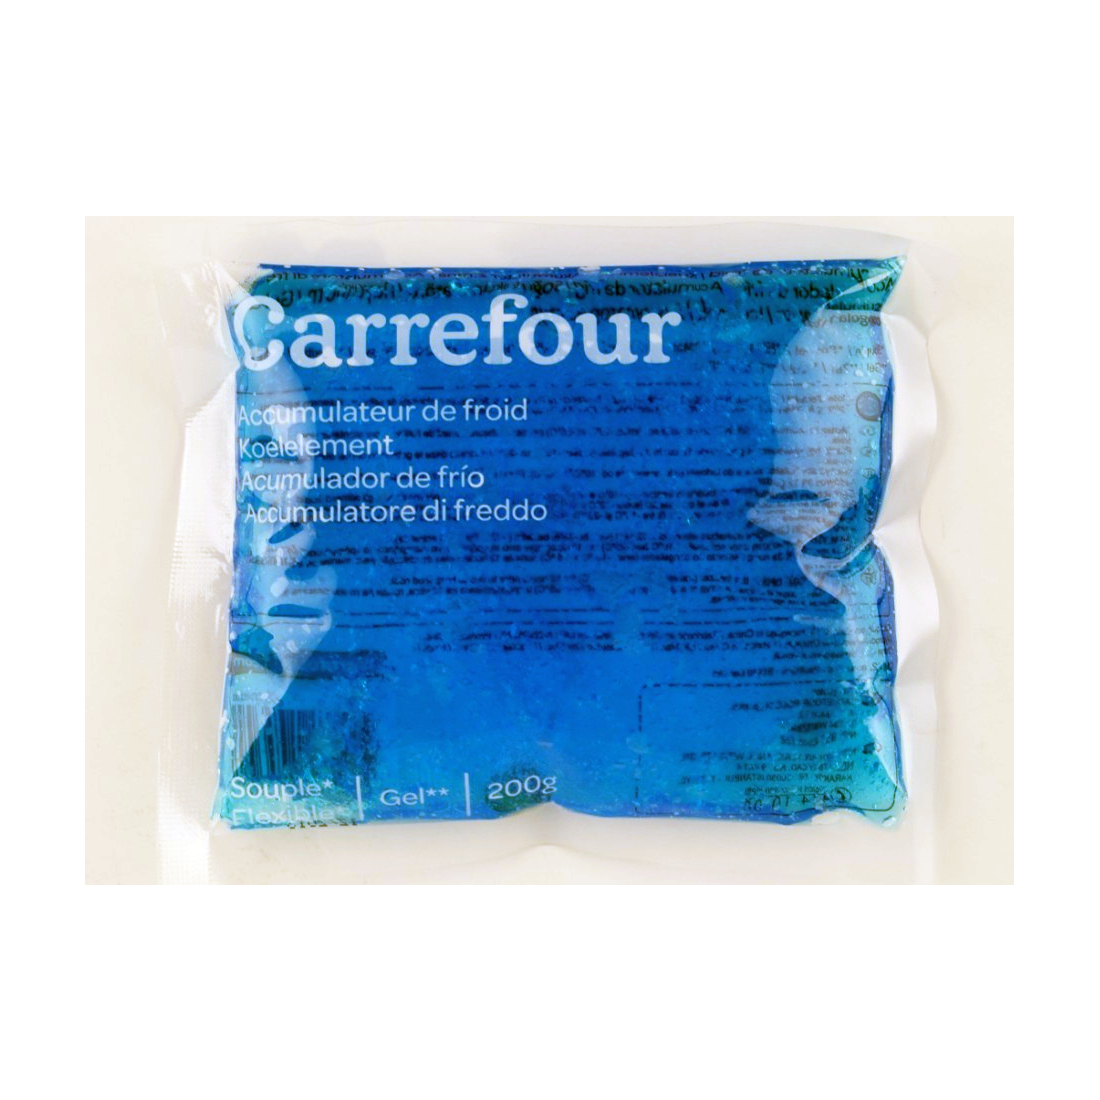 Acumulator frigoric Carrefour